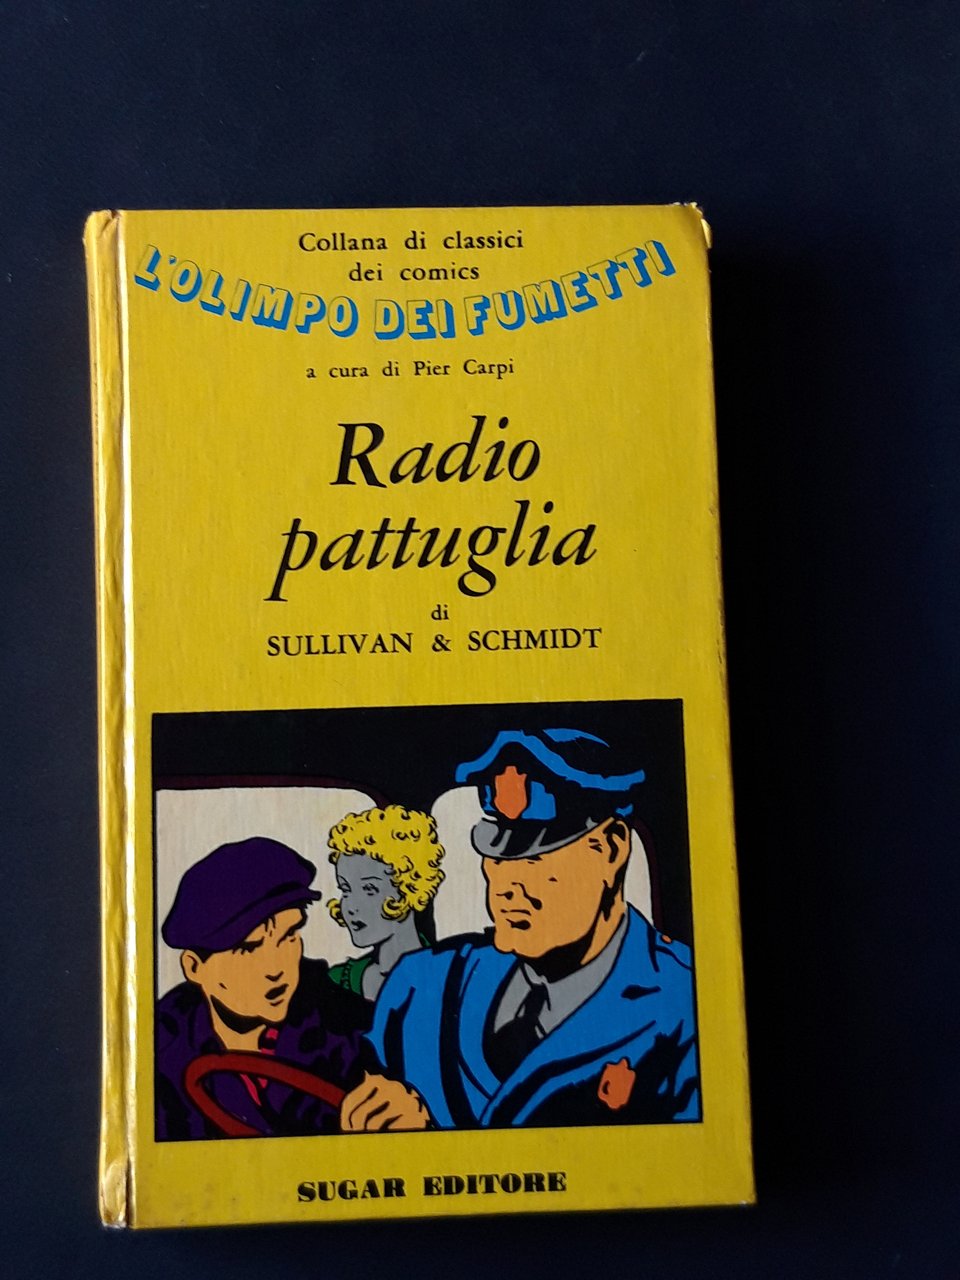 Sullivan &amp; Schmidt, Radio pattuglia, Sugar Editore, 1971 - I